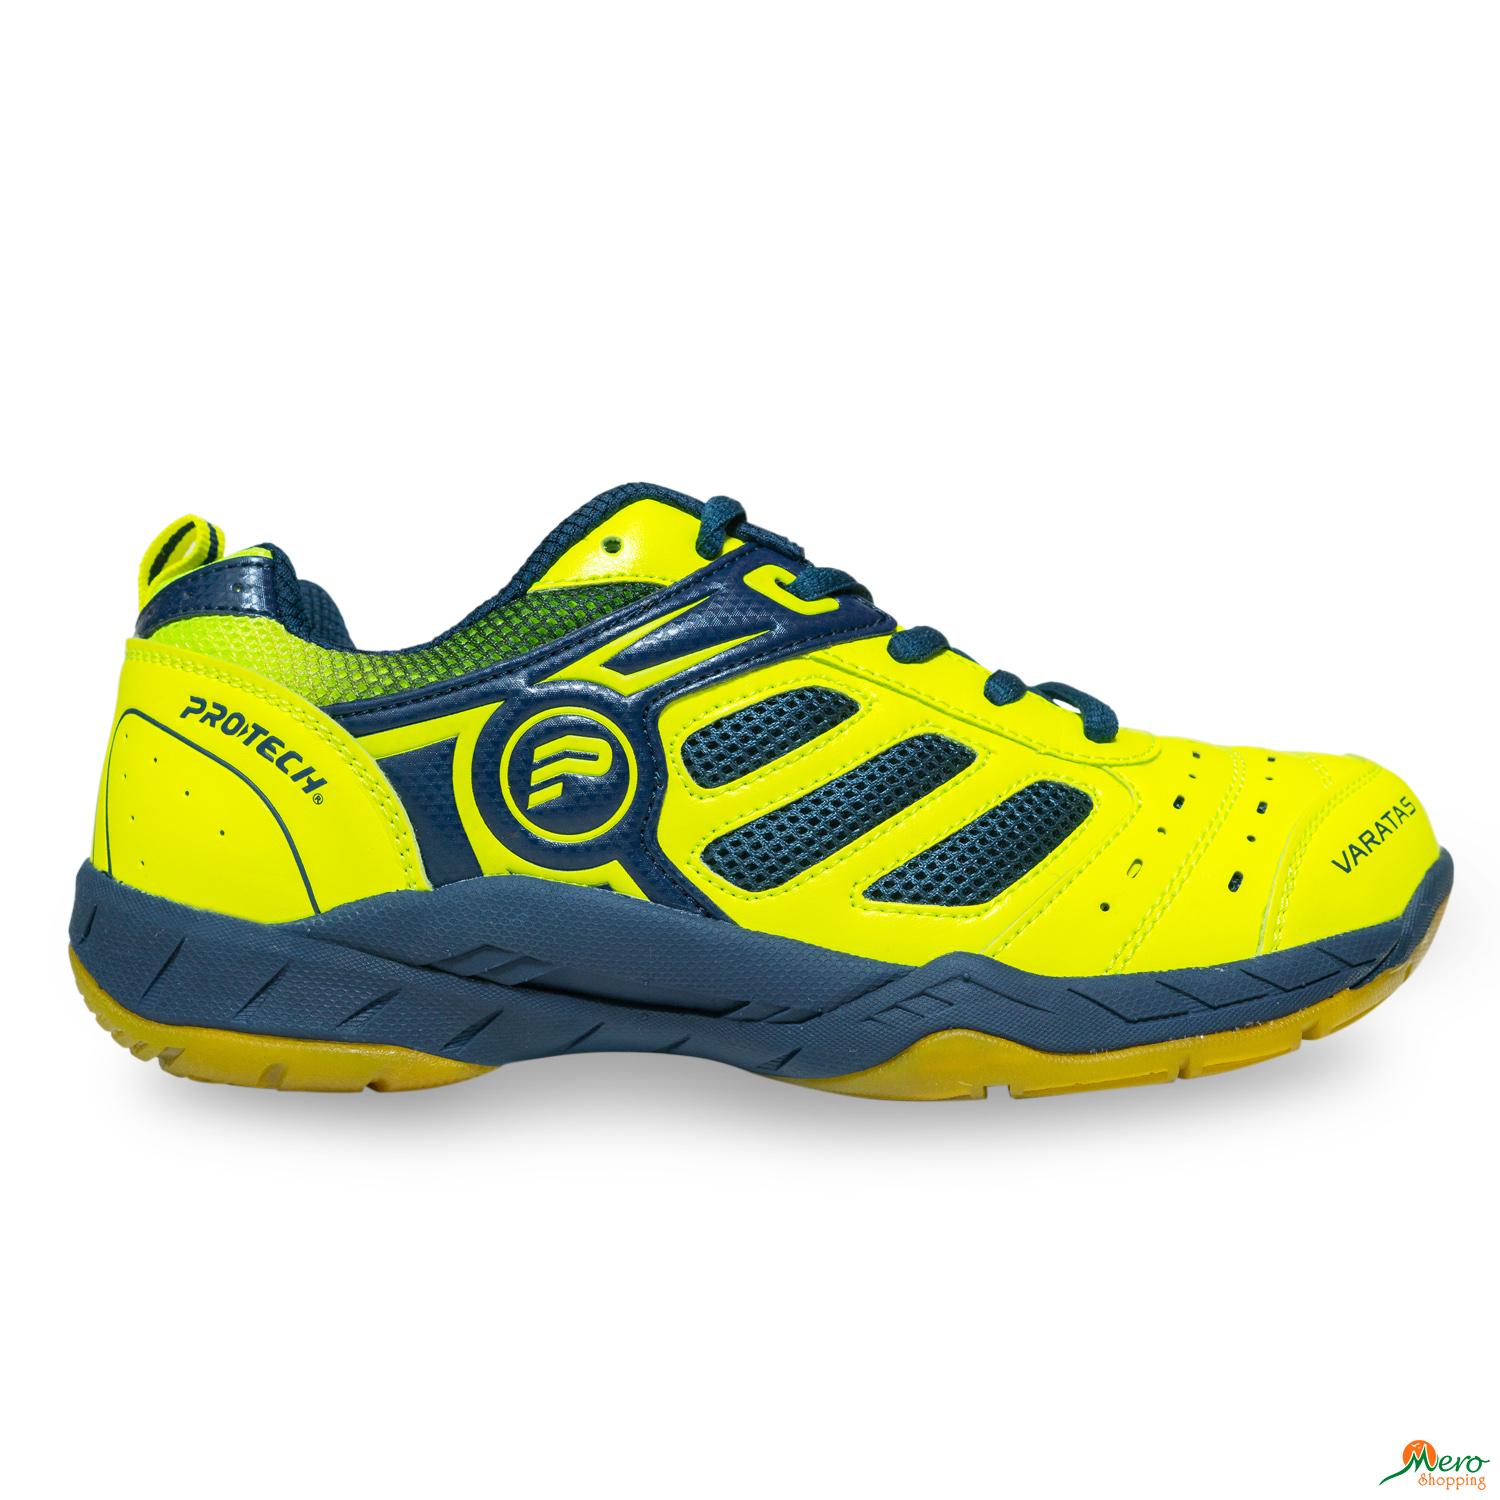 Protech varatas 4.0 Badminton Shoes (Florescent green/navy) 